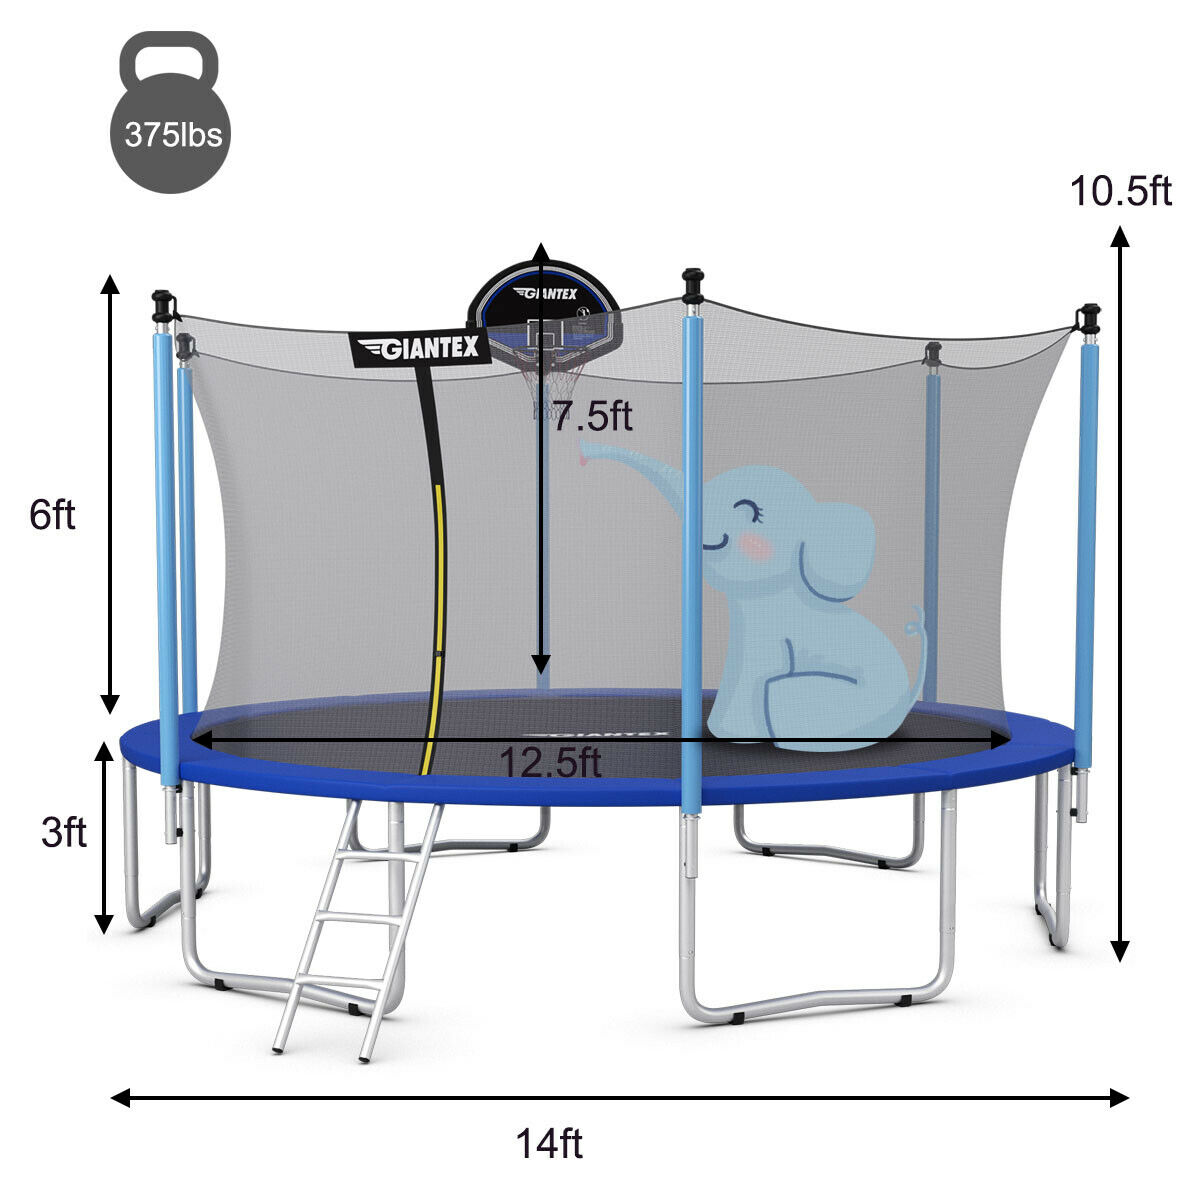 Giantex 14 FT Trampoline Combo Bounce Jump Safety Enclosure Net W/Basketball Hoop Ladder